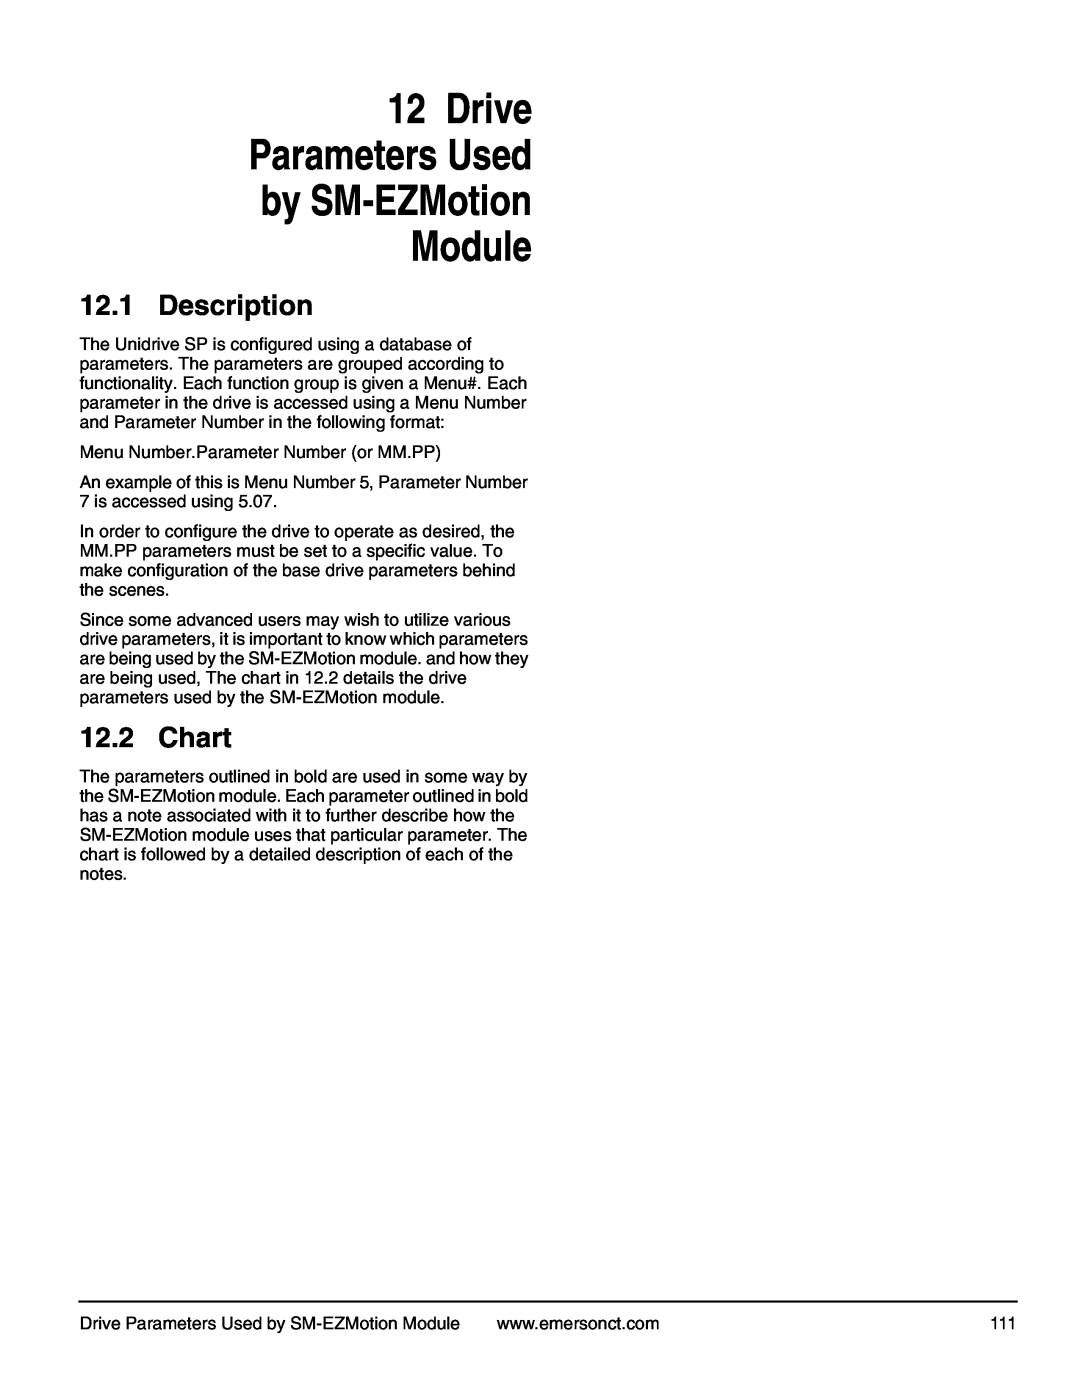 Emerson P/N 400361-00 manual Drive Parameters Used by SM-EZMotion Module, Description, Chart 